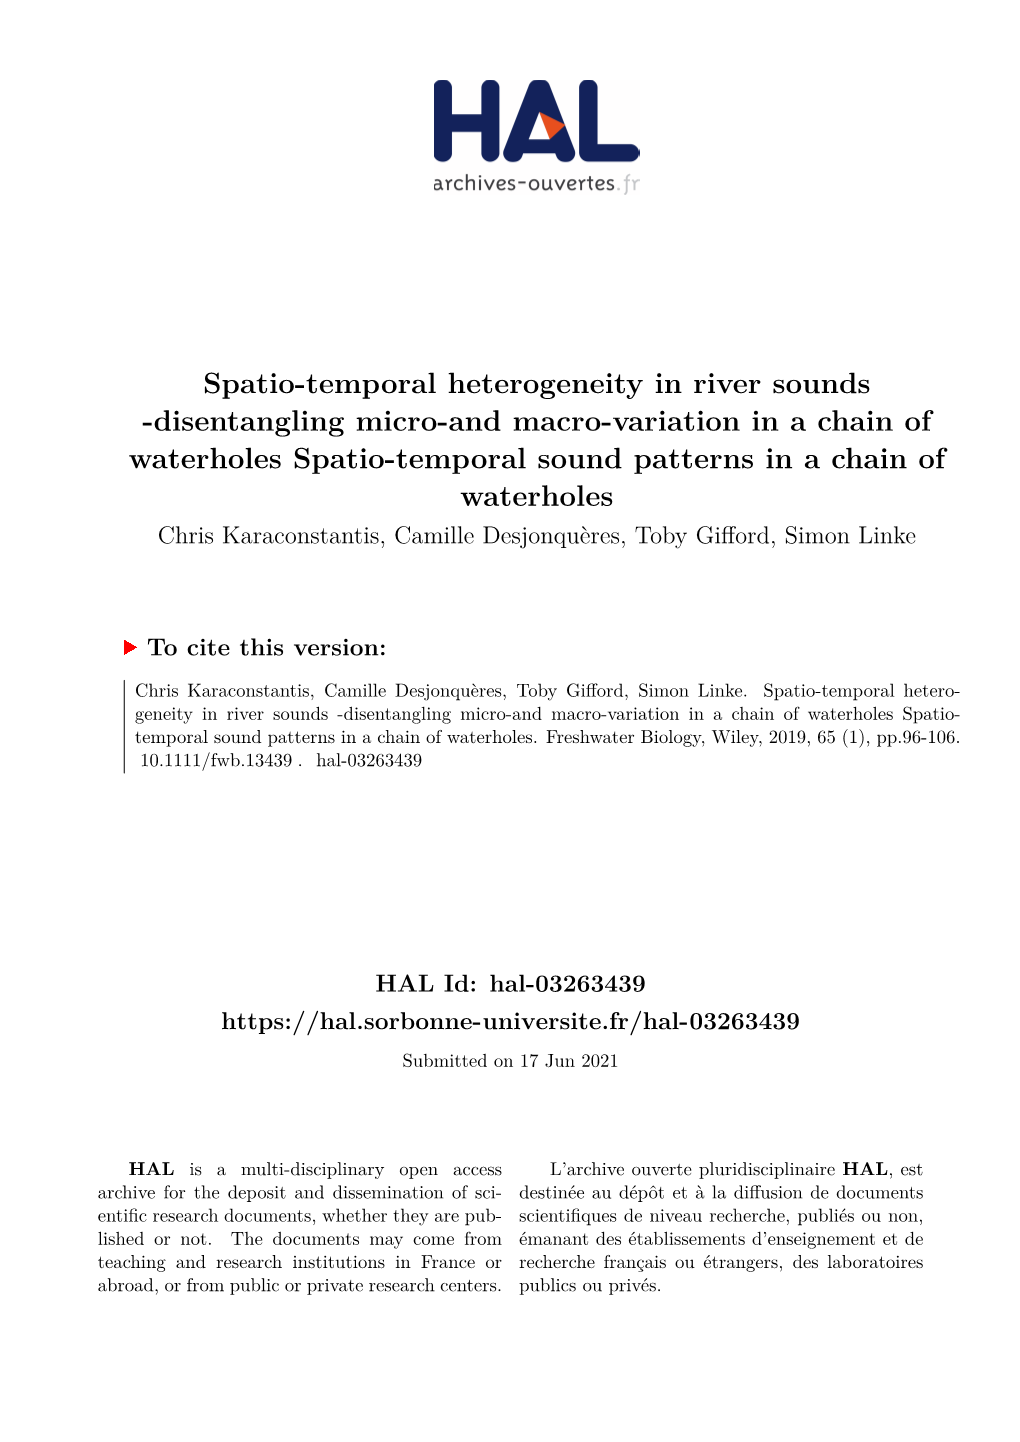 Spatio-Temporal Heterogeneity in River Sounds